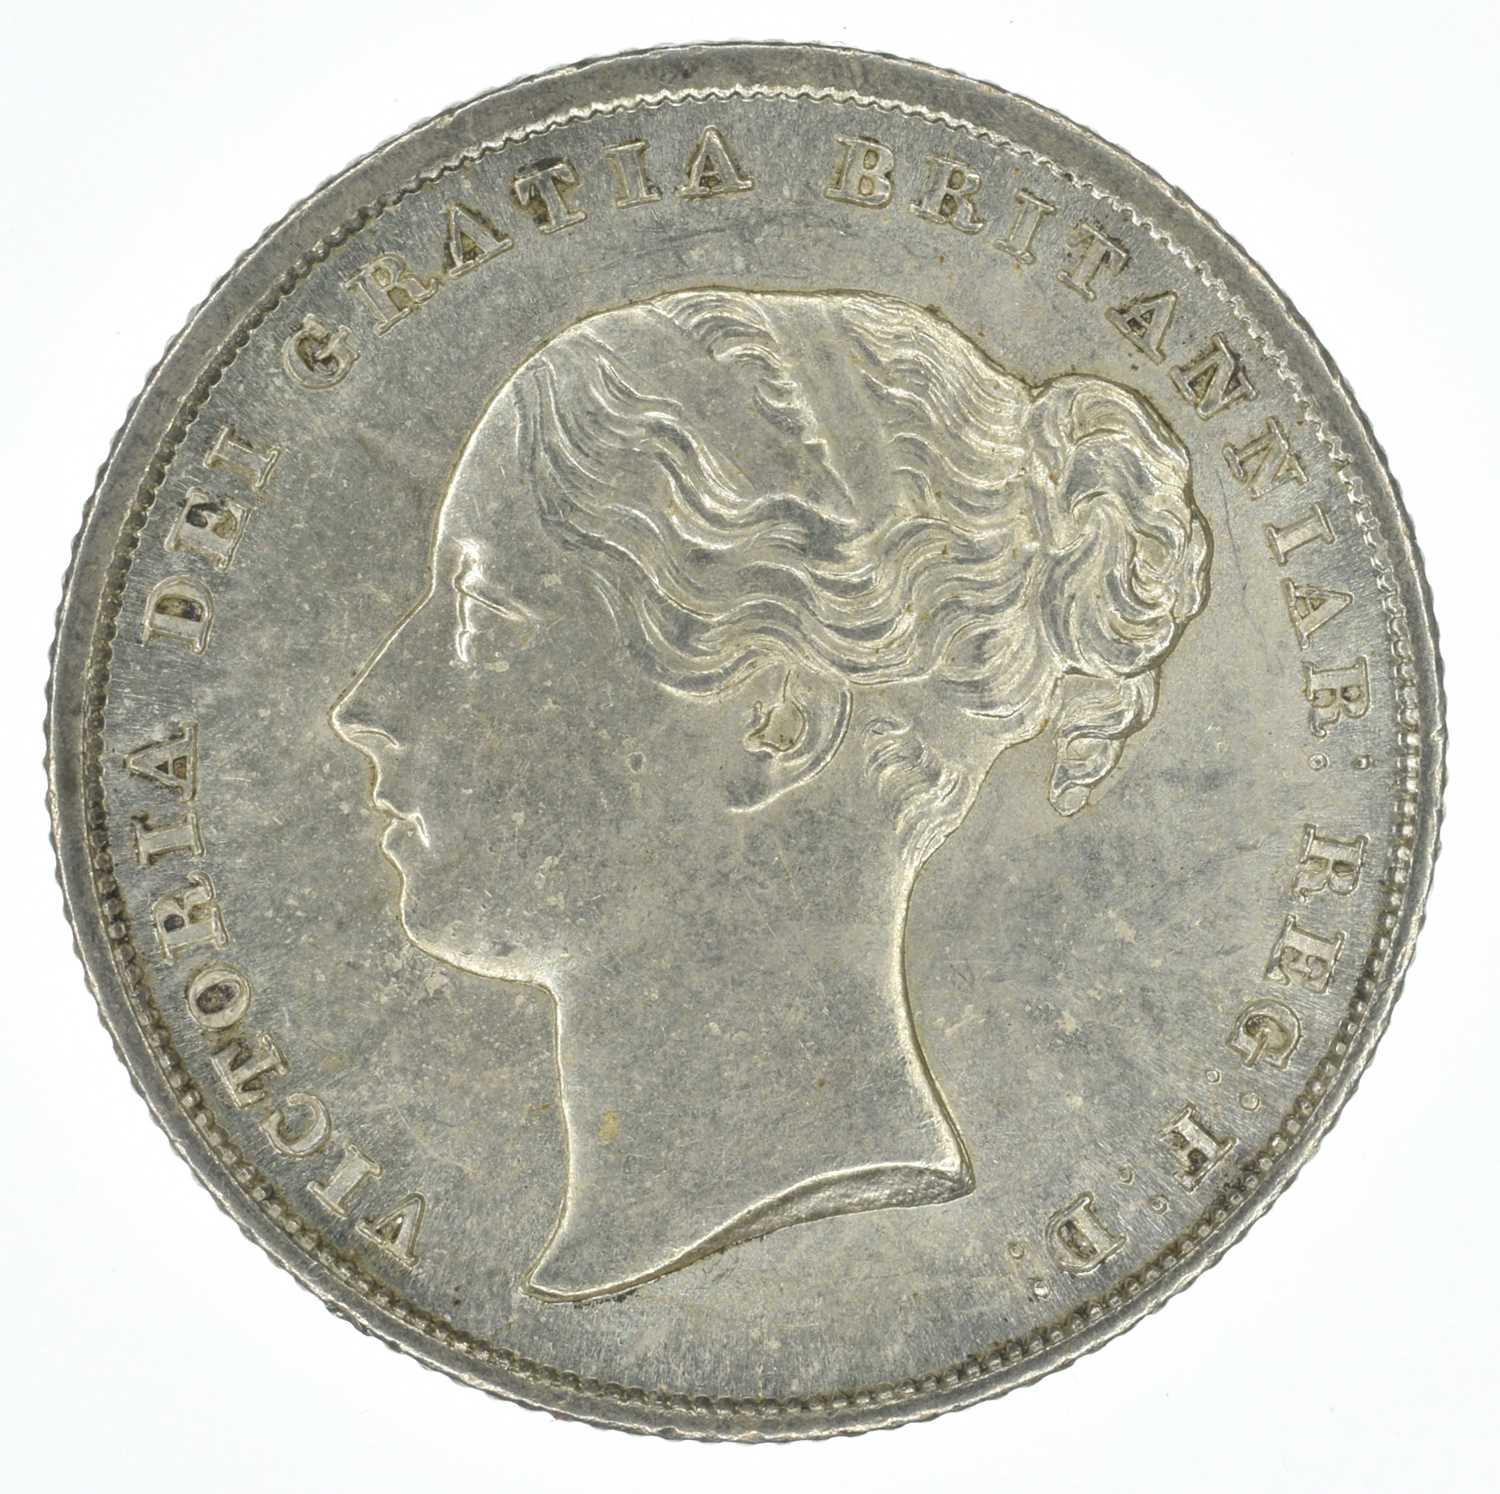 Queen Victoria, Shilling, 1839, gEF.